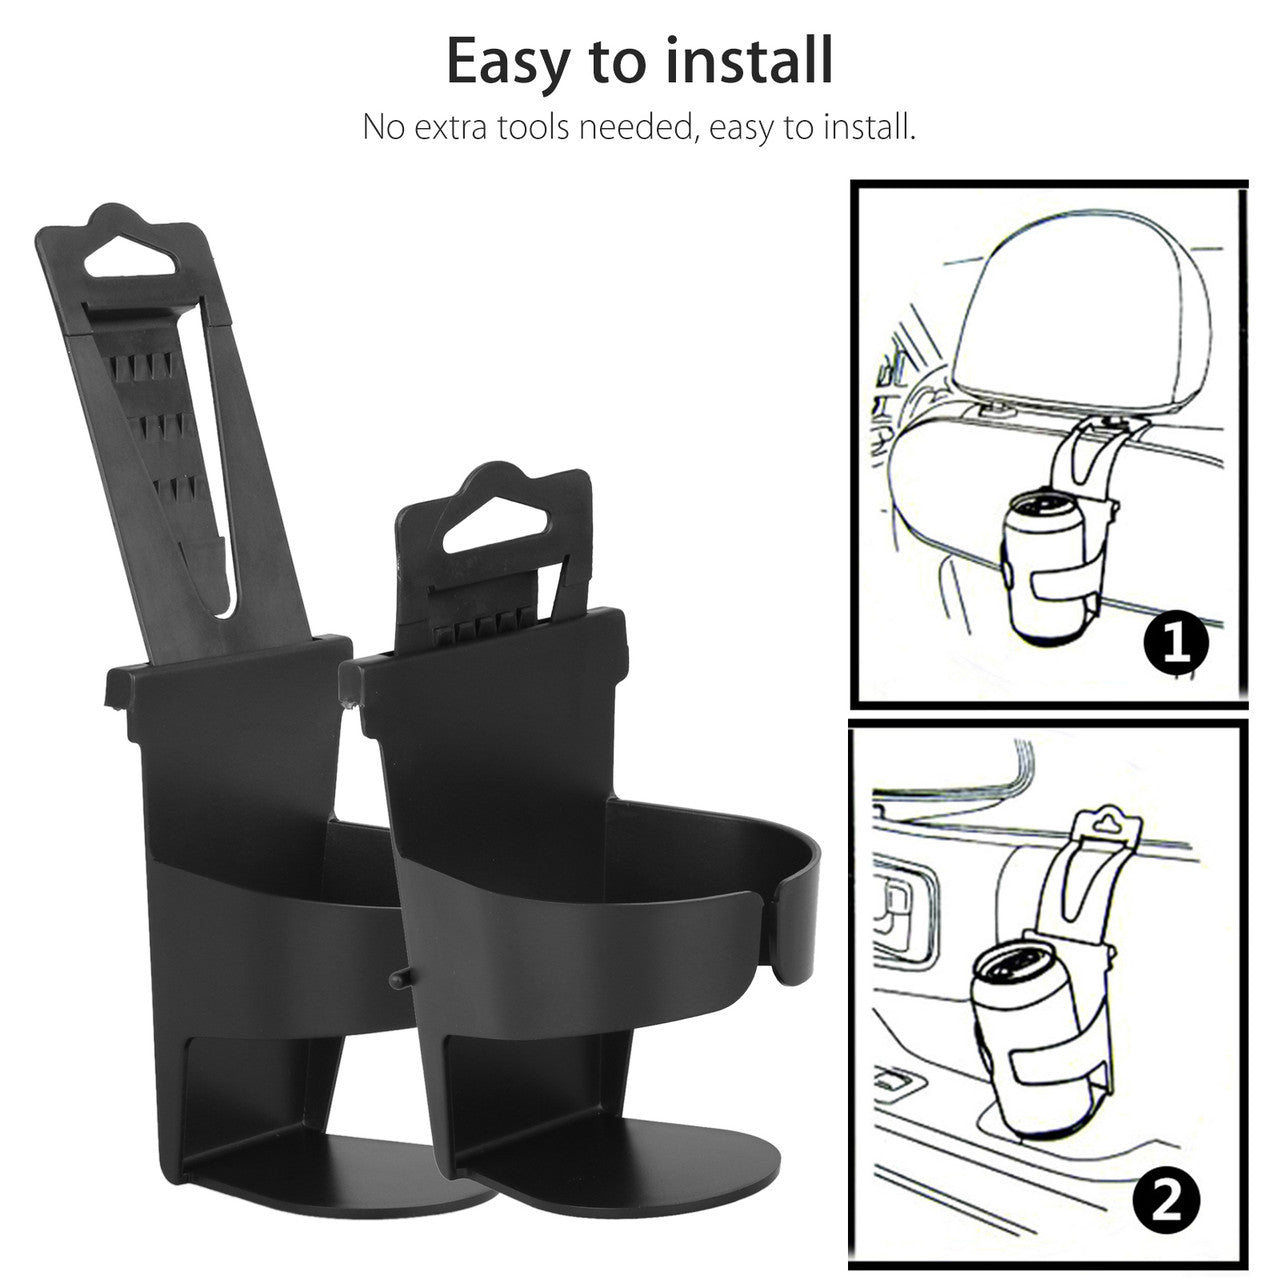 Plastic Car Cup Holder, Adjustable Drink Bottle Coffee Cup Holder Hanger for SUVs Cars Truck Jeep (Black), 2 Pack